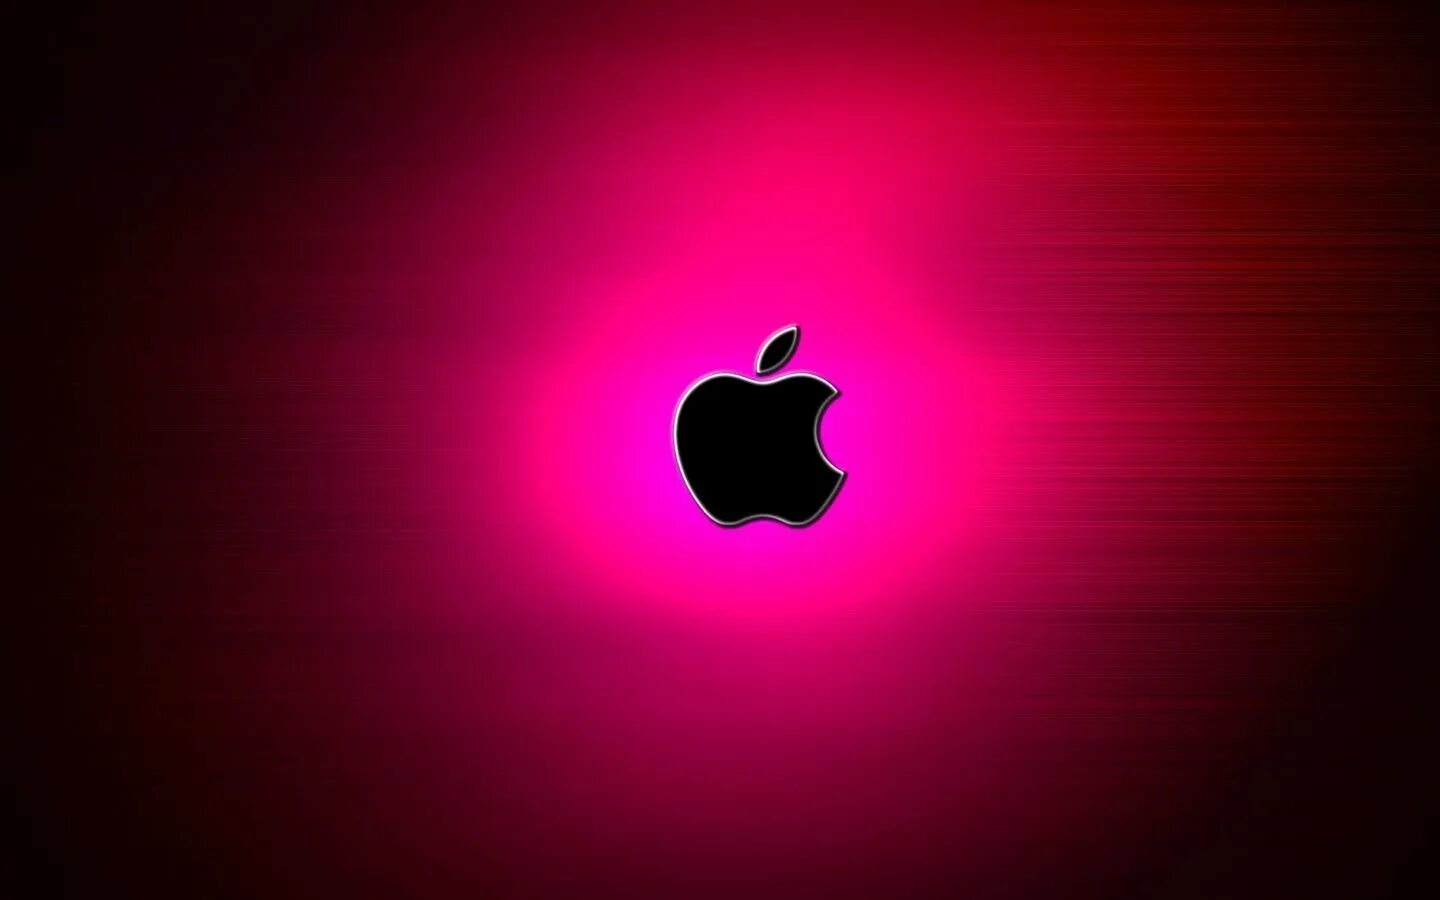 Обои эппл. Обои Apple. Красивый логотип айфона. Заставка эпл. Apple красивый логотип.